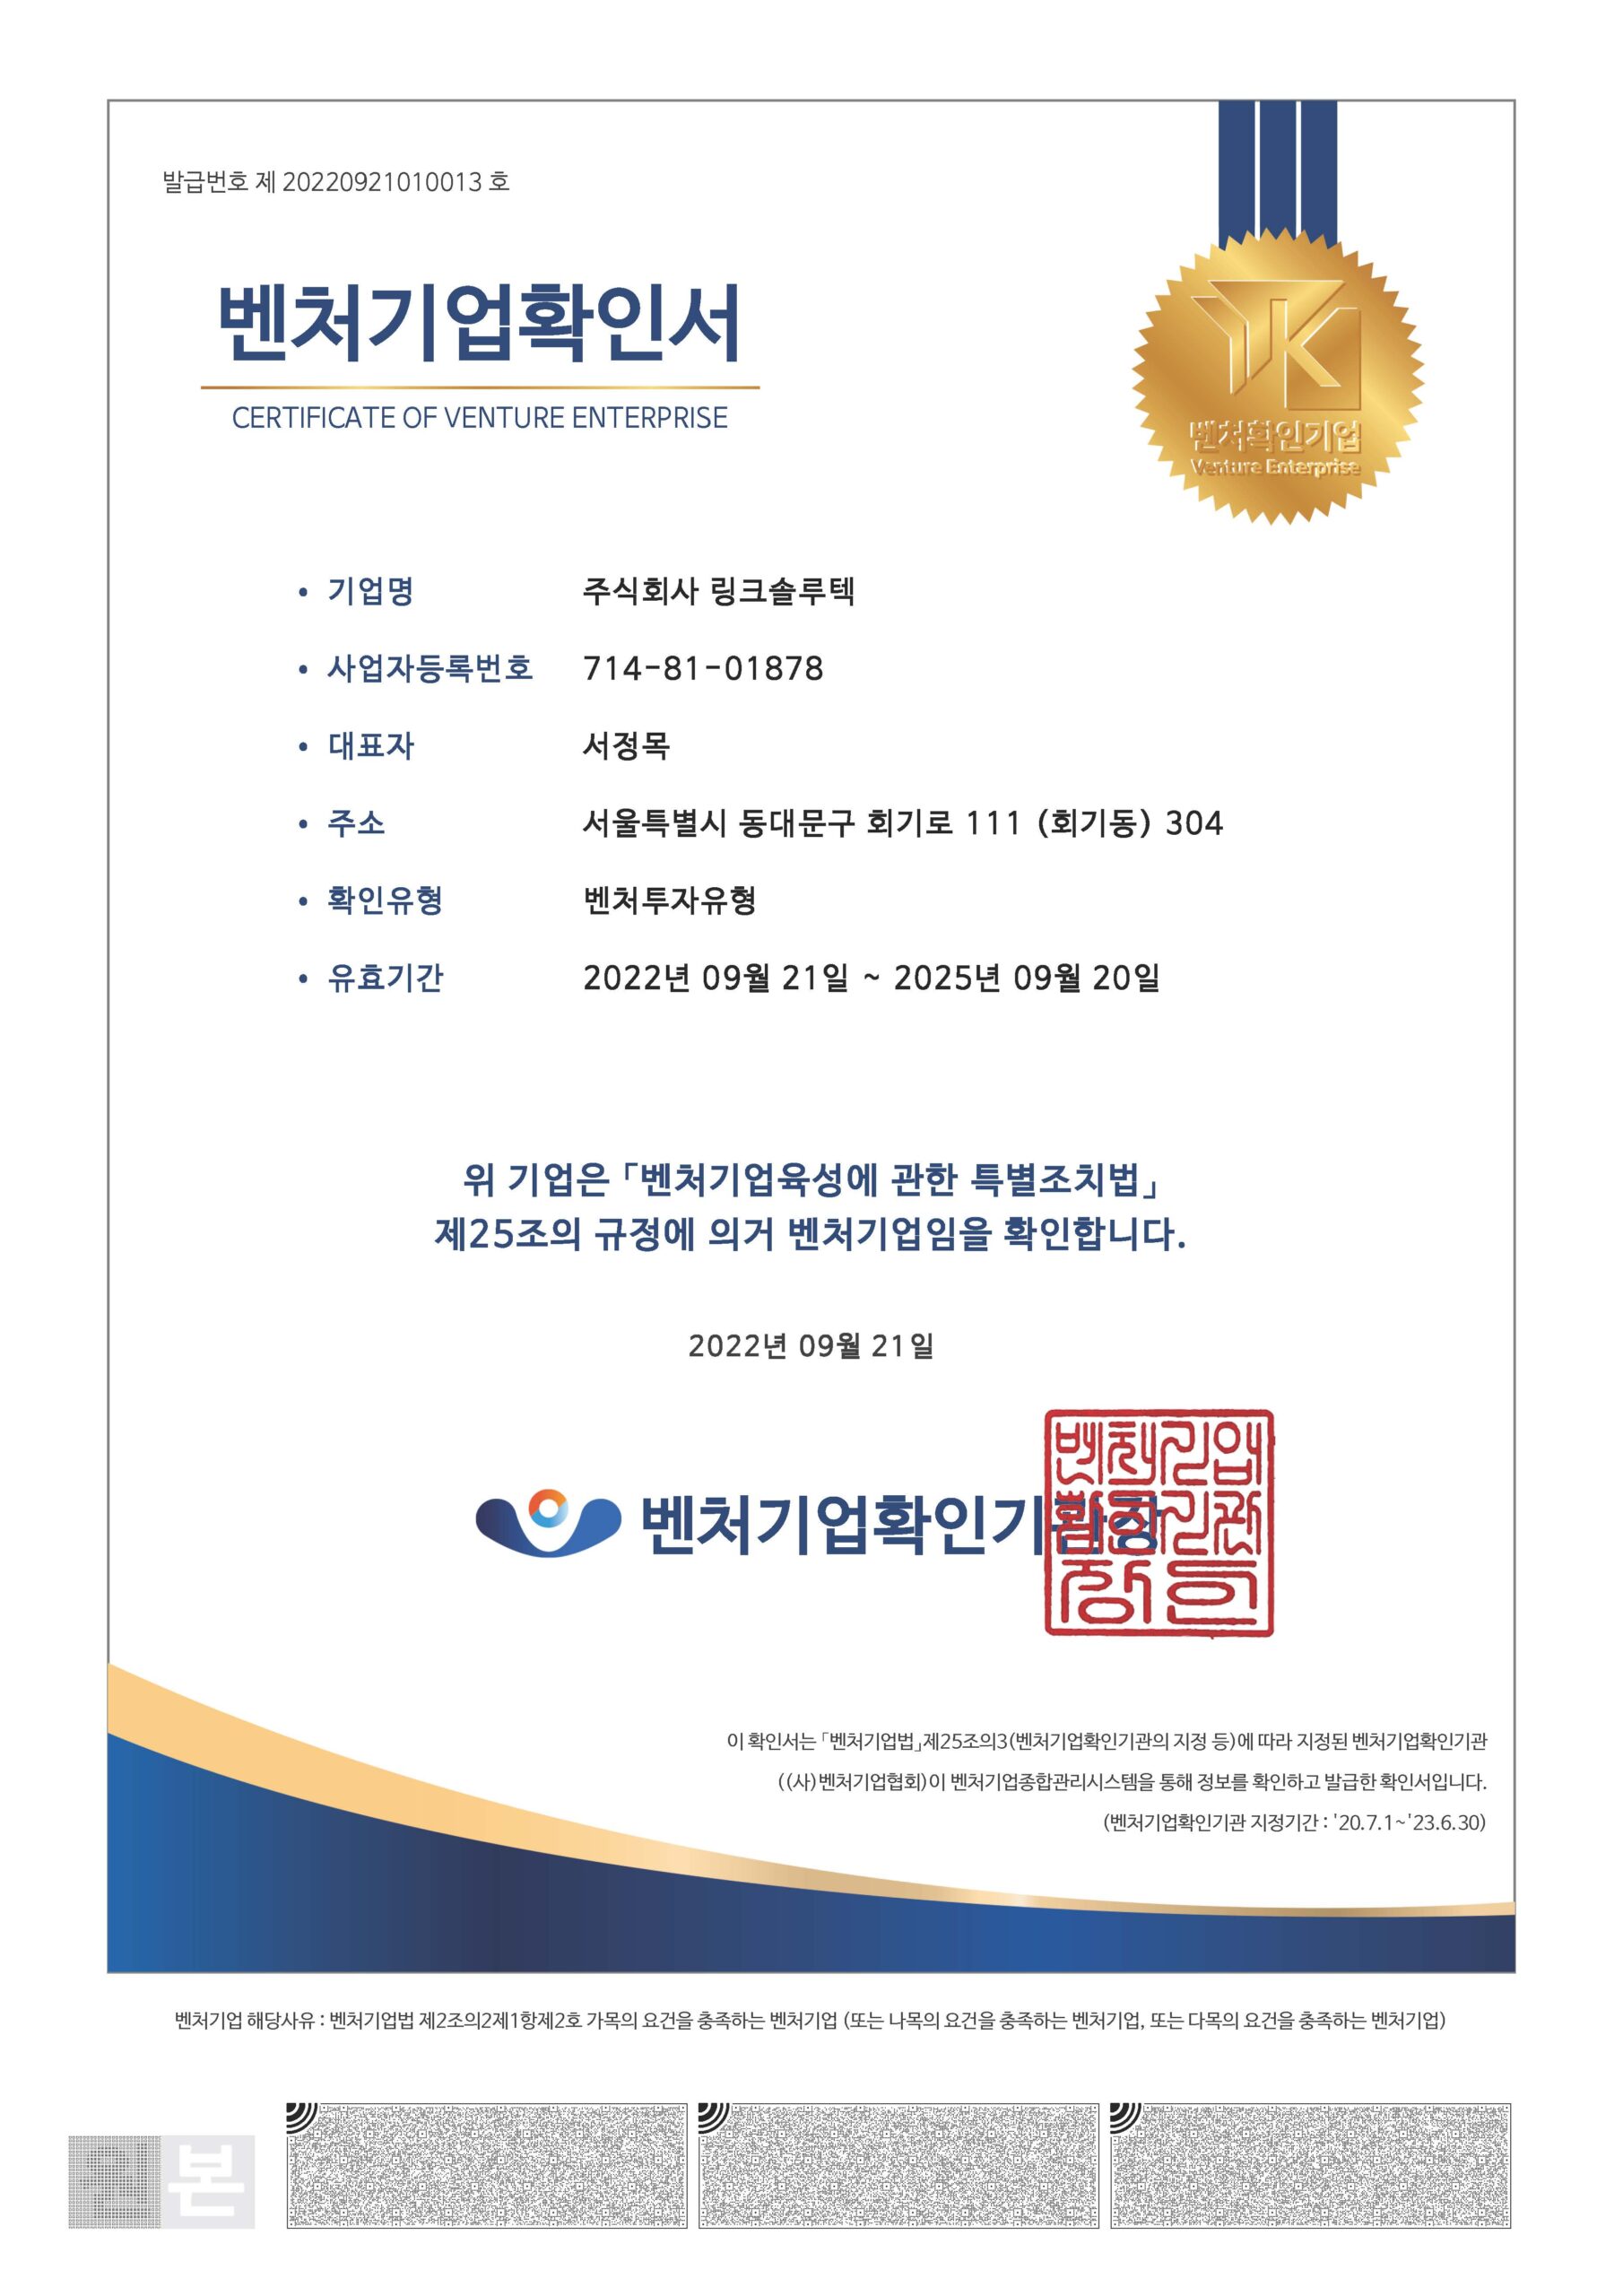 Certification of Venture Enterprise